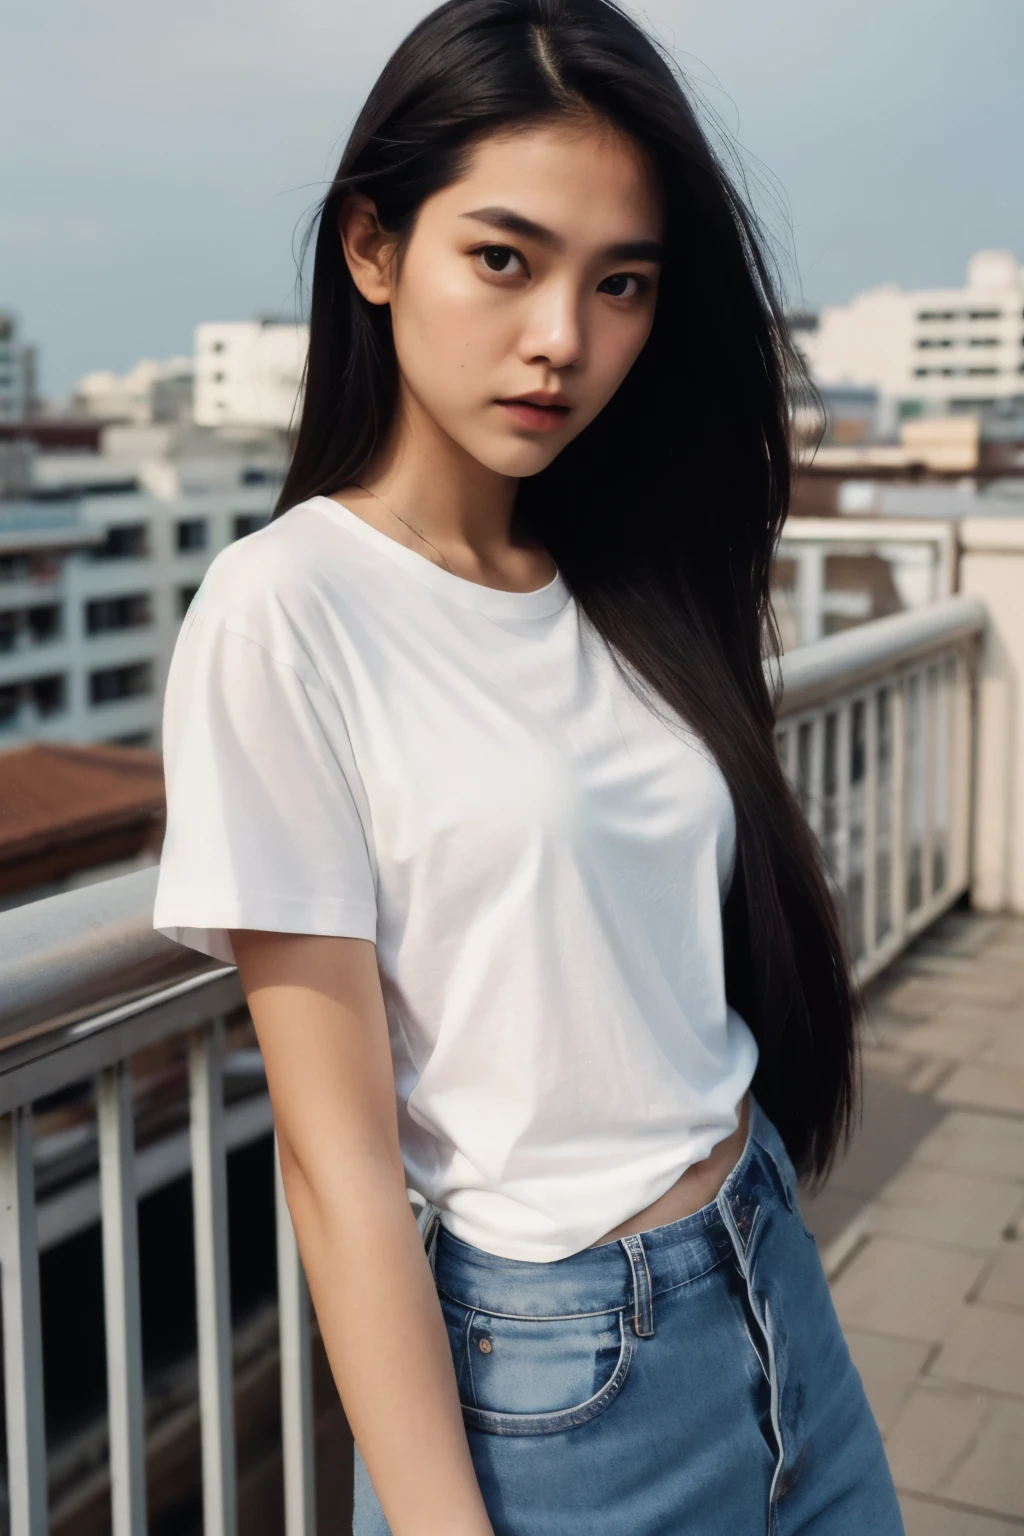 Thai Woman, look at viewer, long hair, T-Shirt , jeans, (town rooftop), film grain, rim light, upper body, close up shot, hands in pocket